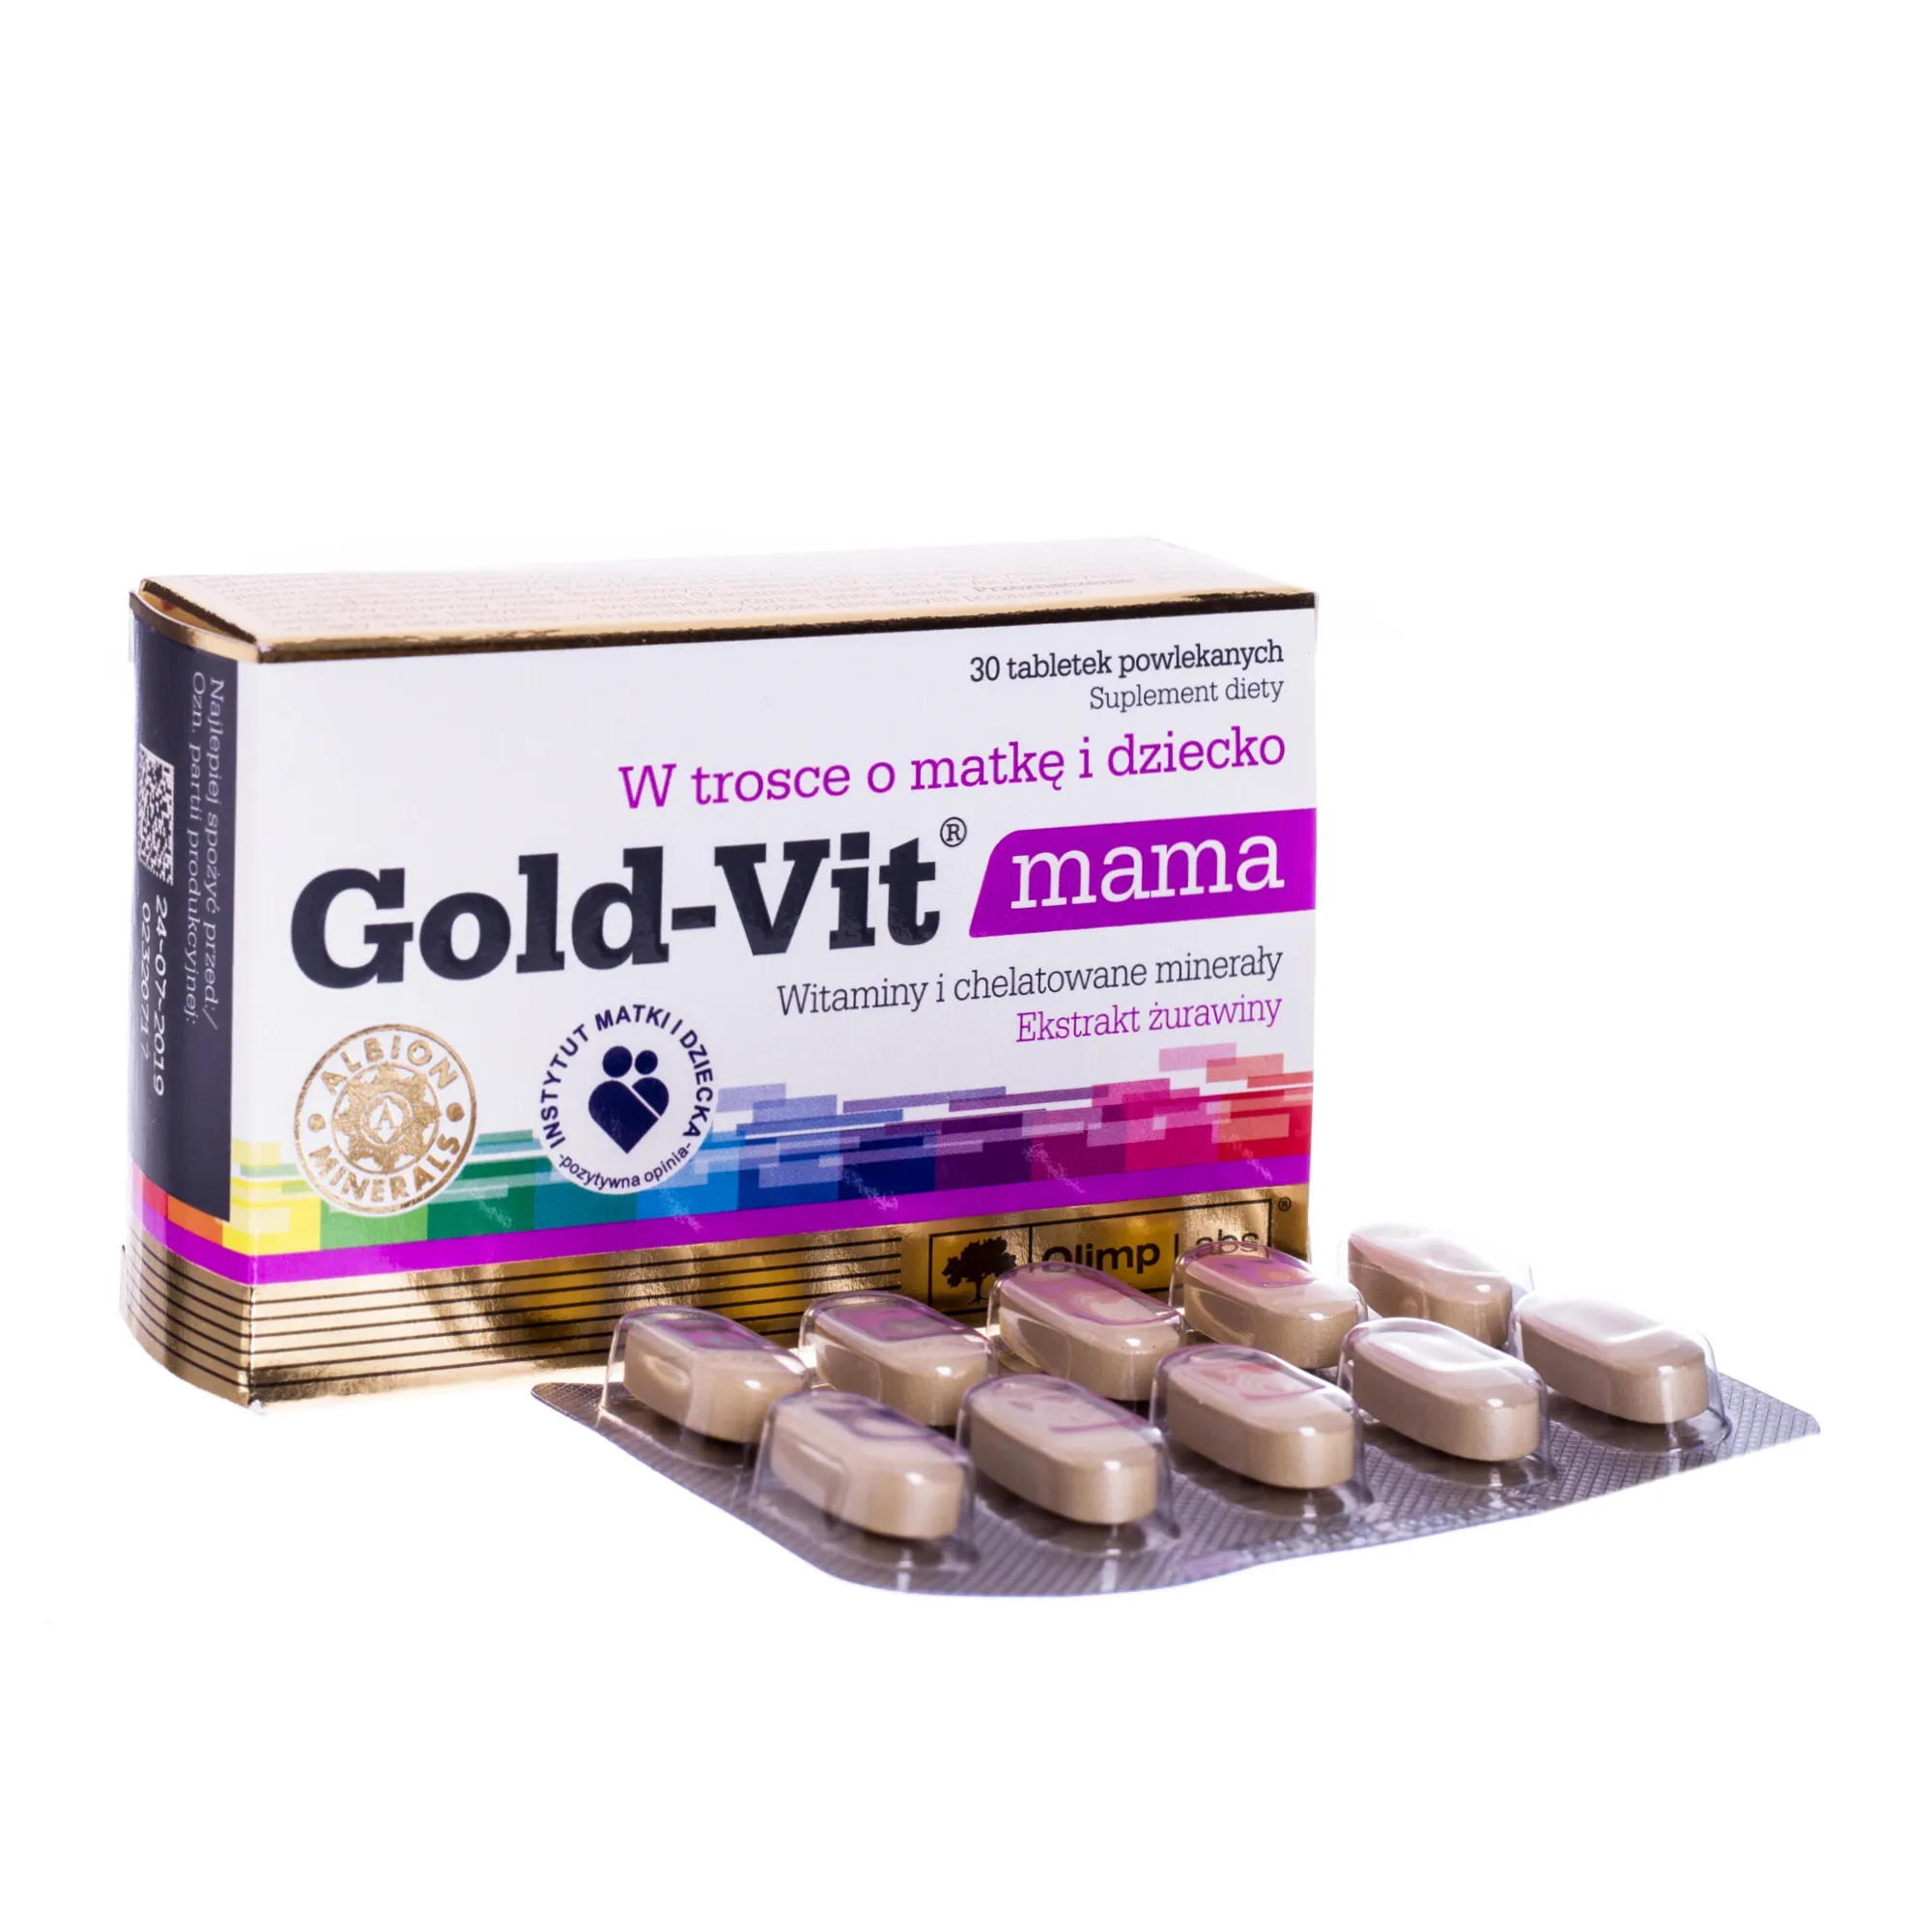 Olimp Gold-Vit Mama, suplement diety, 30 tabletek